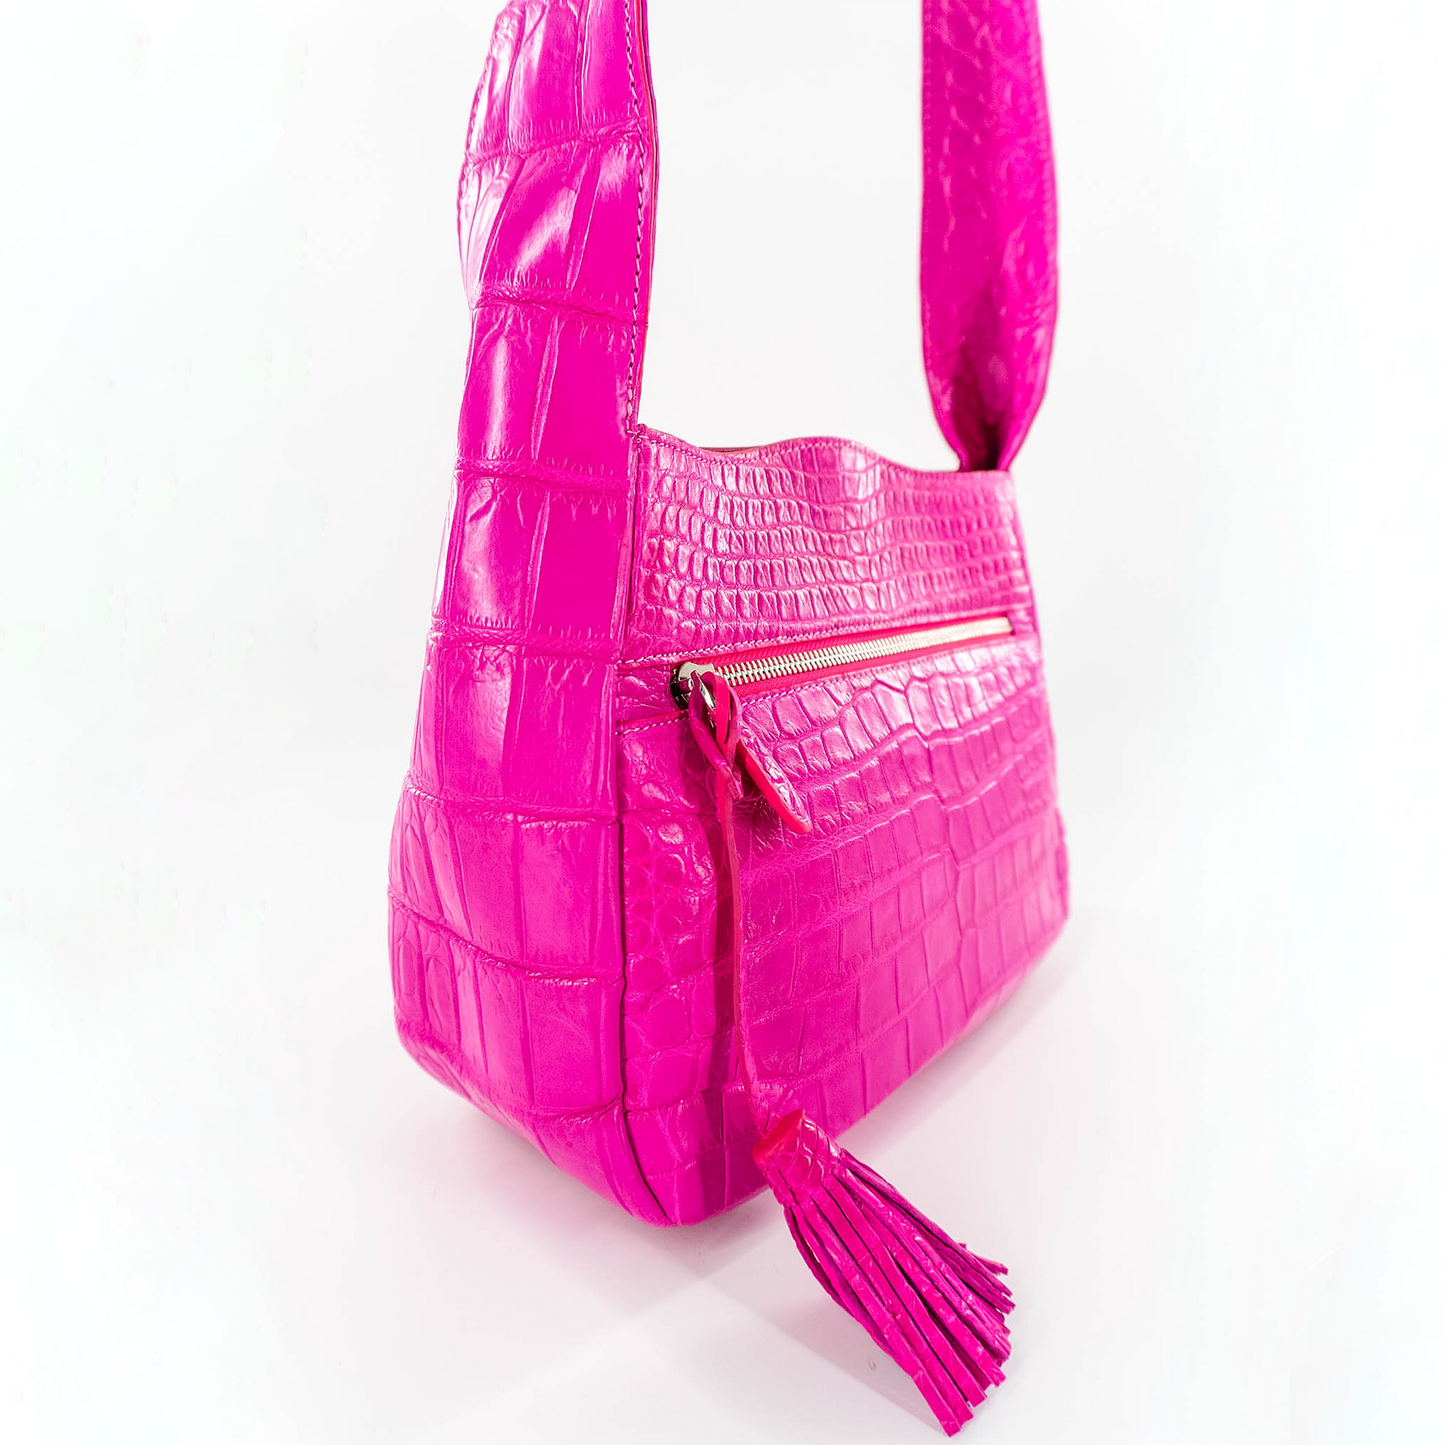 One Handle Handbag in Matte Pink Crocodile Belly Skin